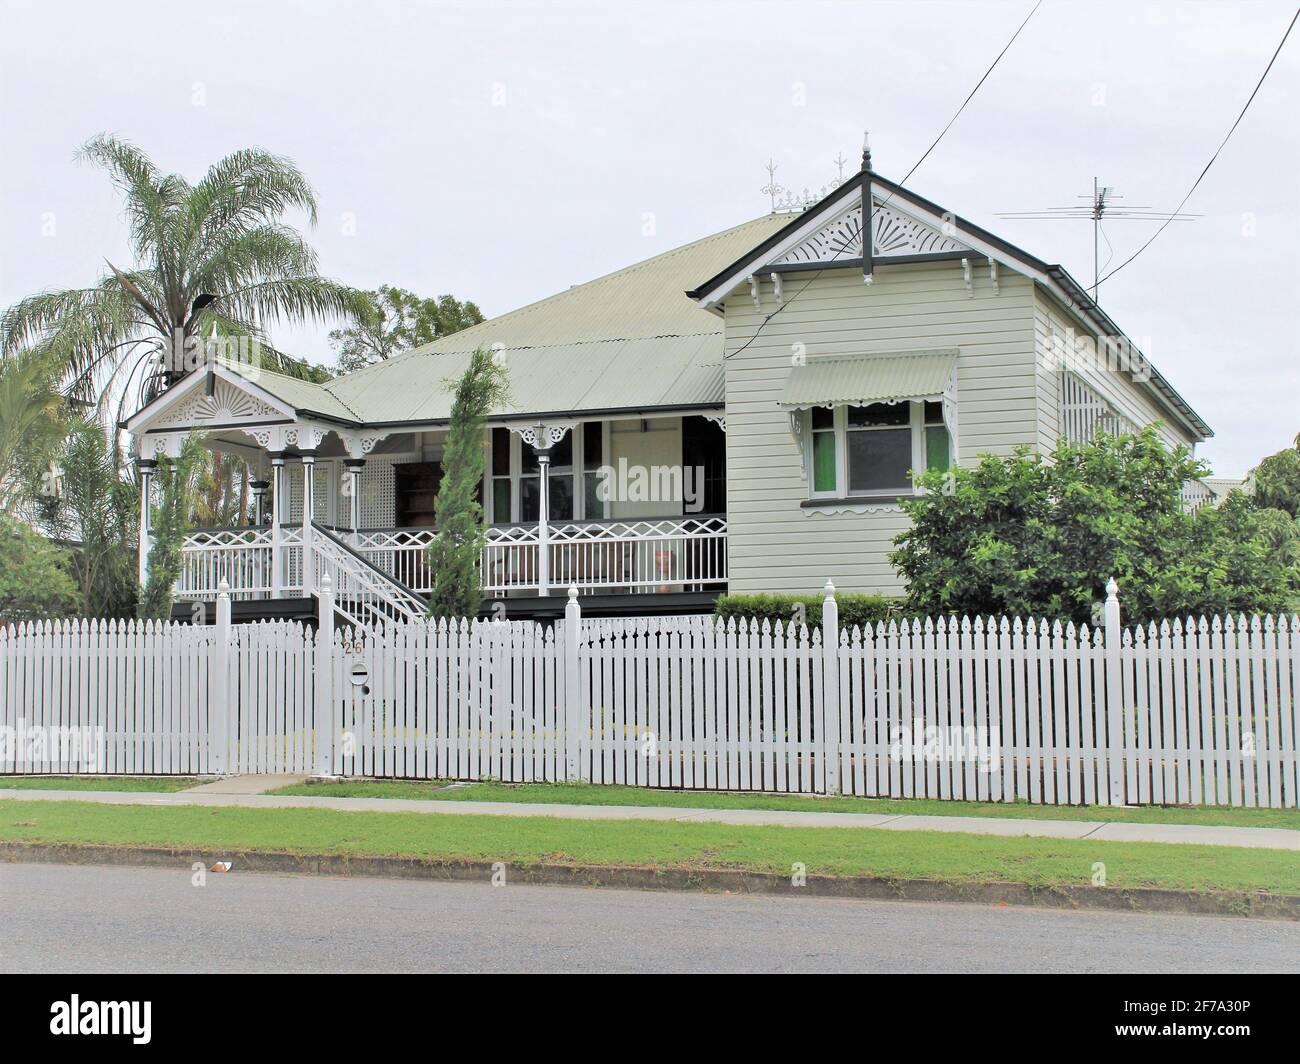 Australian Housing Styles, Queenslander House, Australian Vernacular Architecture, A Queenslander House along Harlin Road, Ipswich. Stock Photo